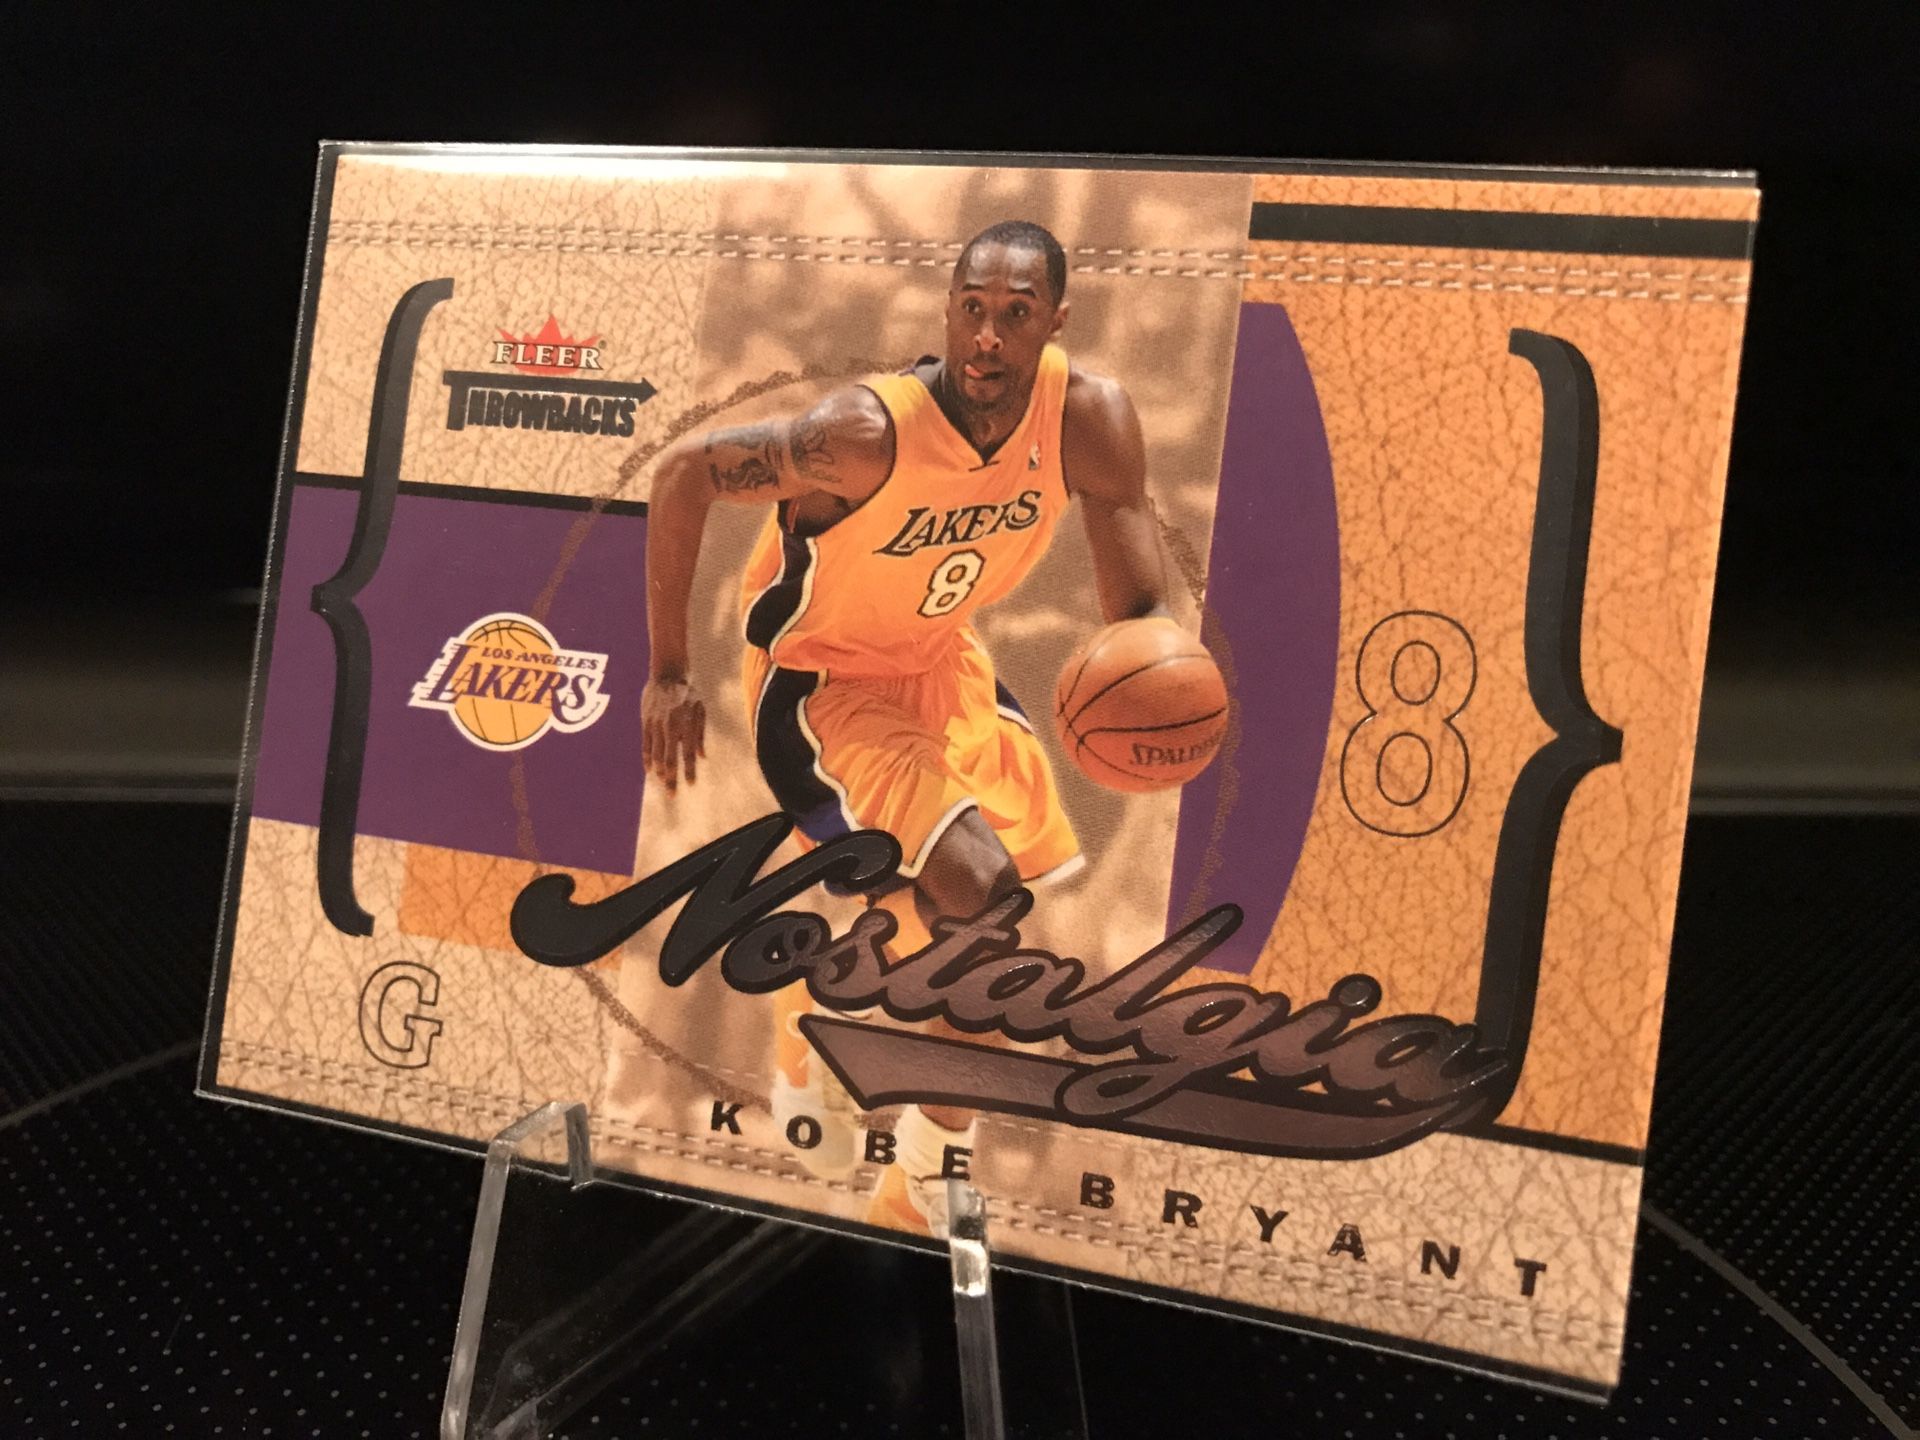 2004 Fleer Throwbacks Kobe Bryant Basketball Card - RARE Numbered Stamped 0672/1996 - Send for PSA Beckett graded 9 or 10 - $39 OBO